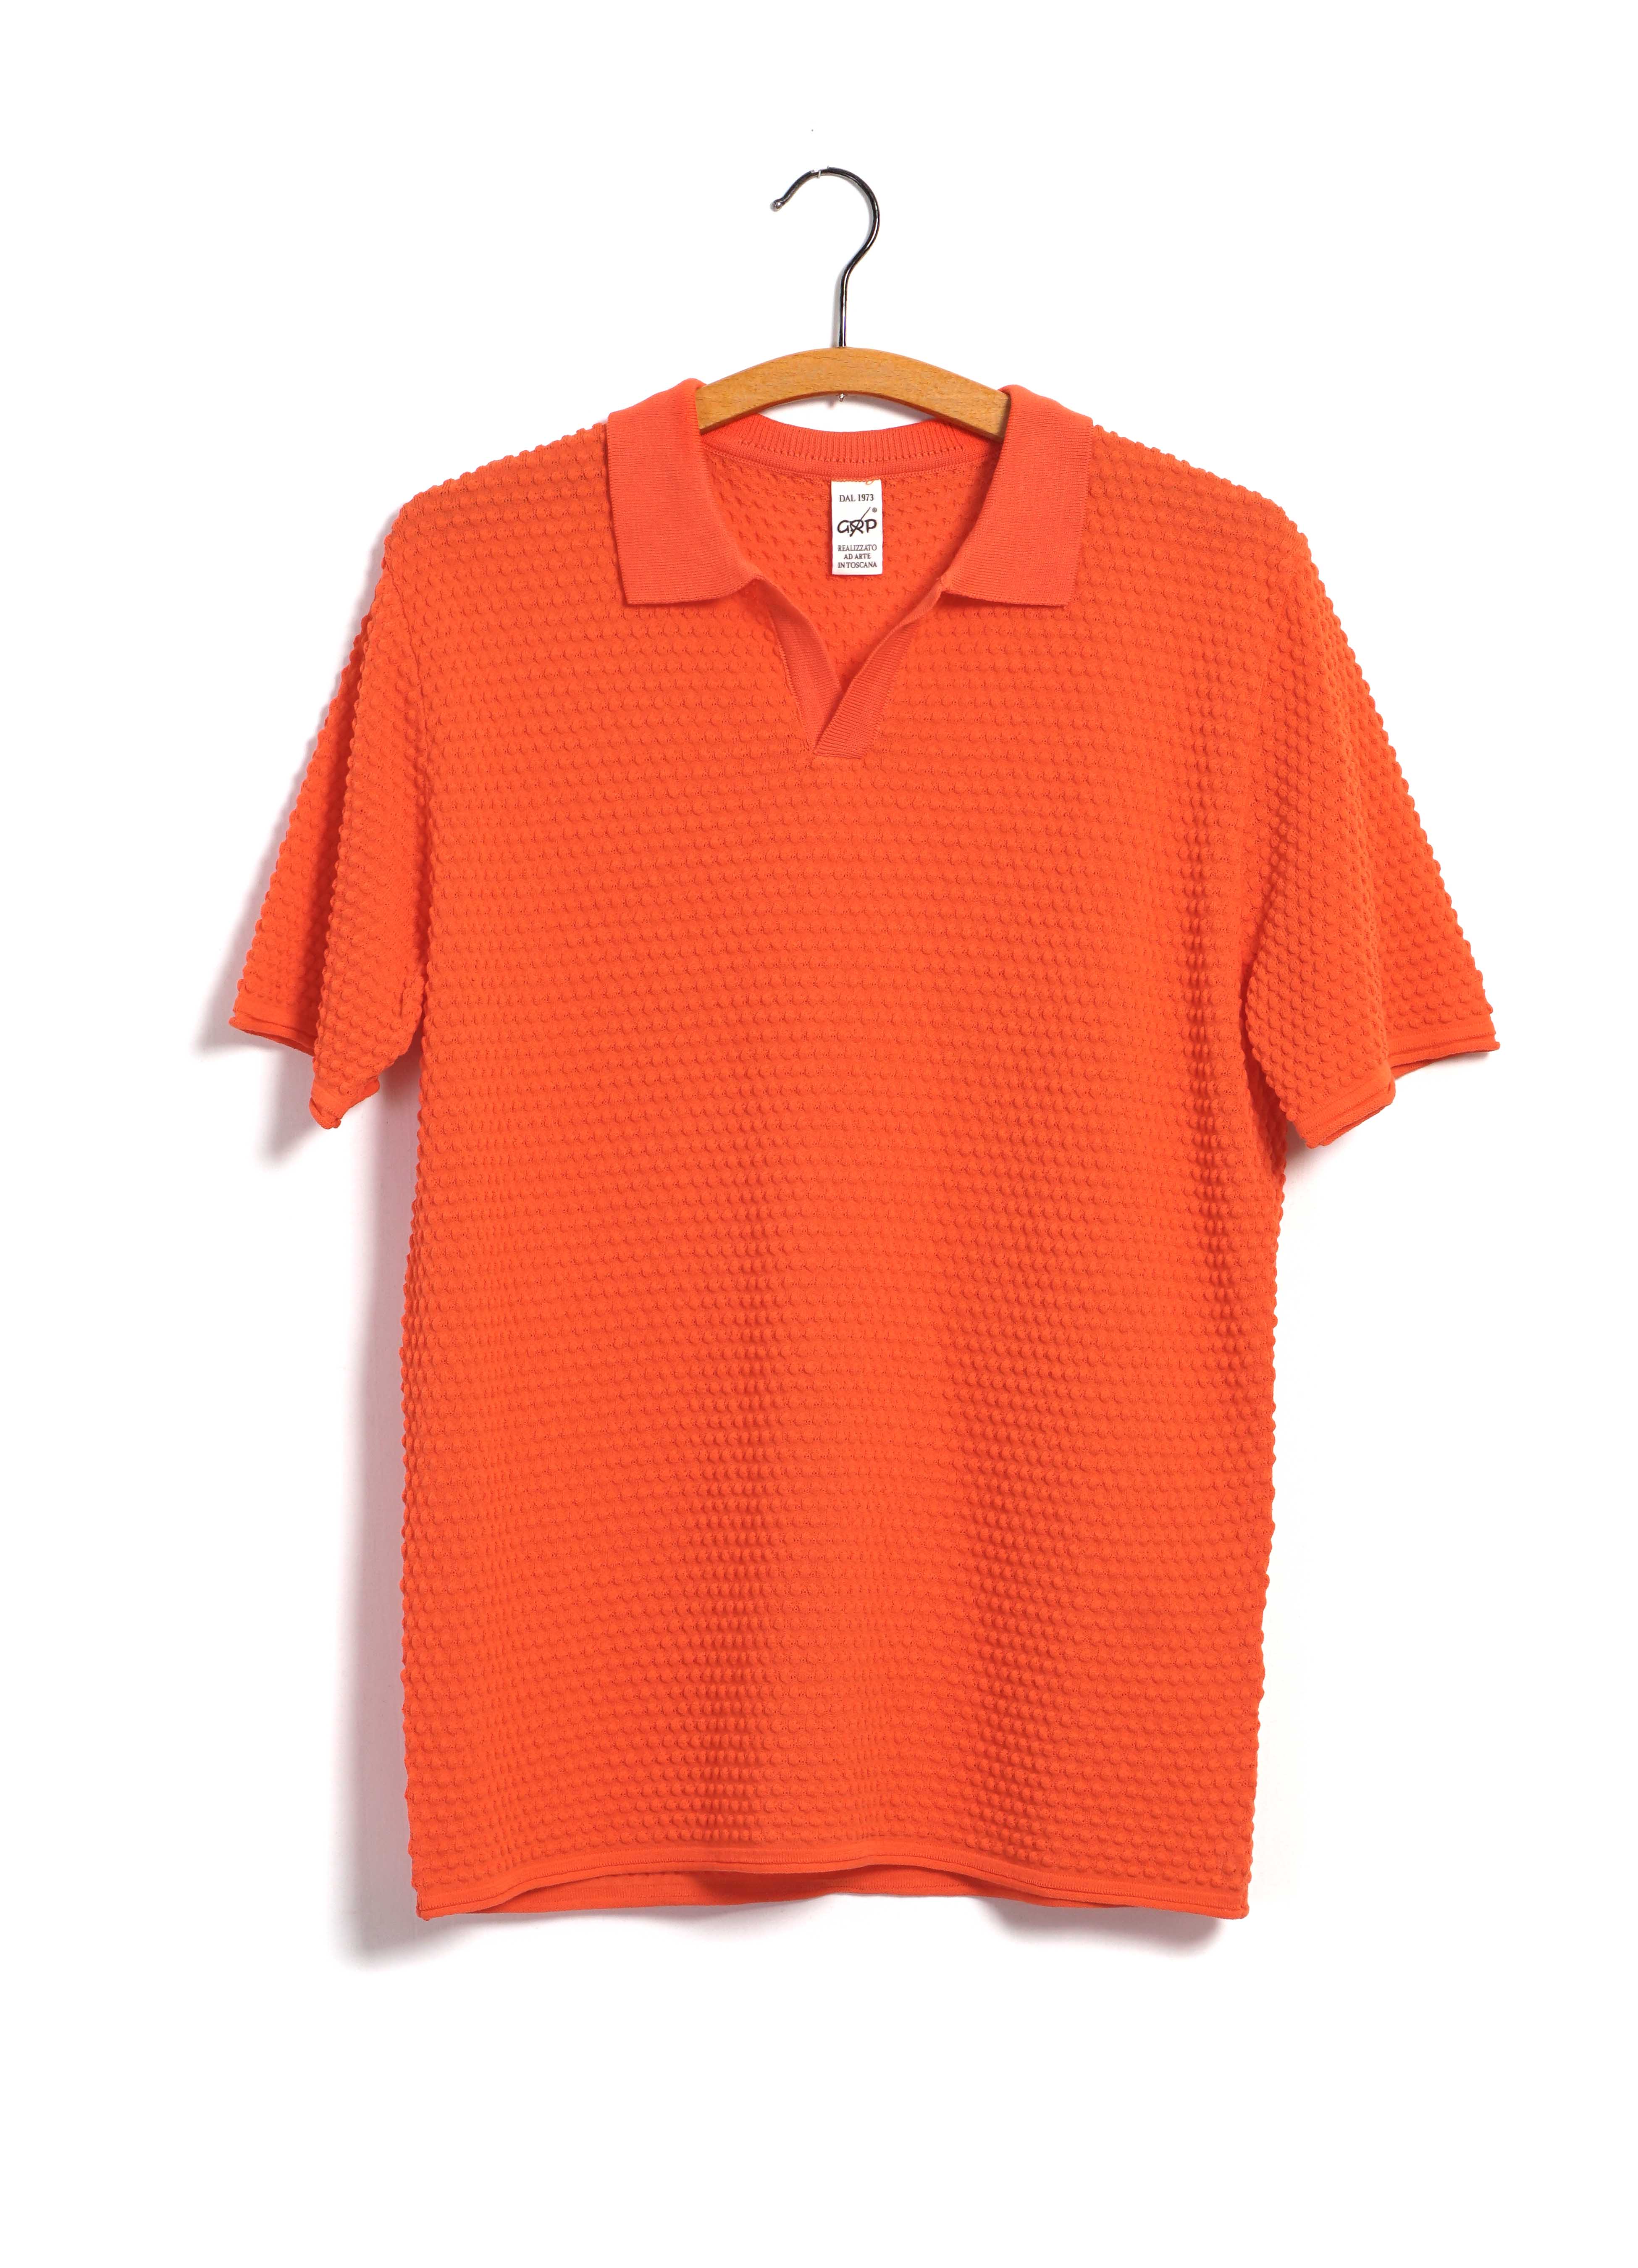 POLO | Short Sleeve Spot Knit Shirt | Orange